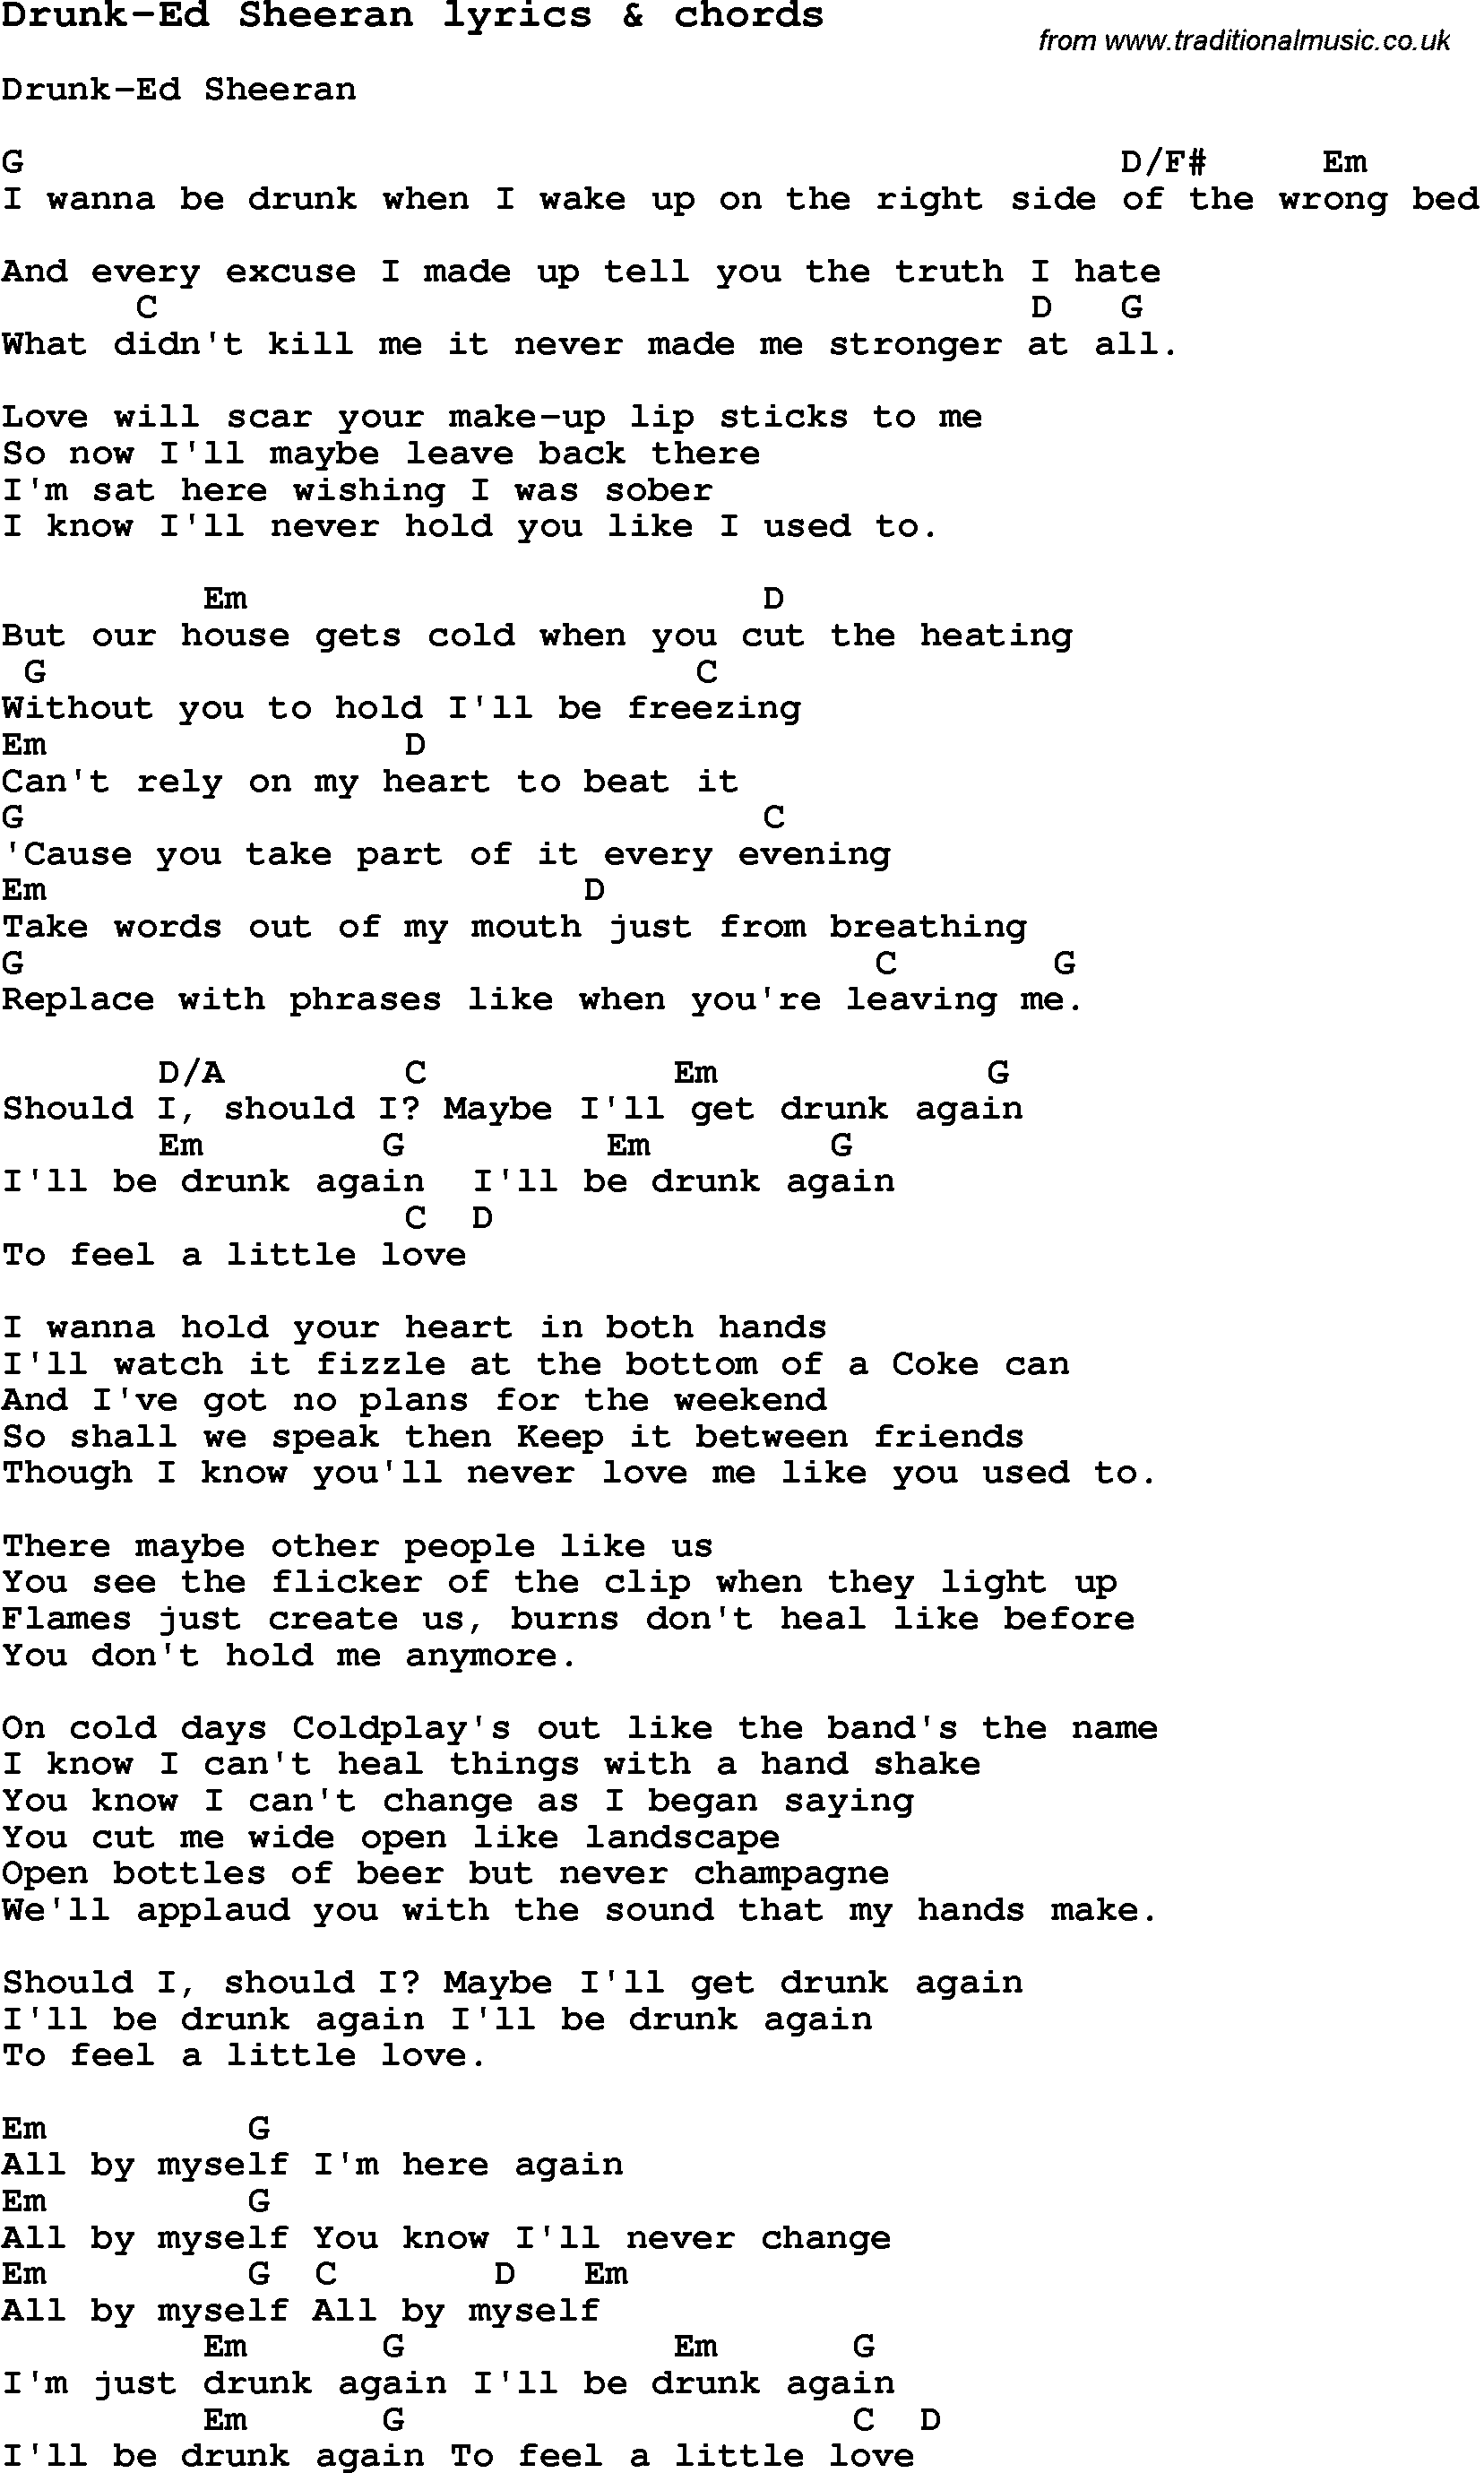 Love Song Lyrics for: Drunk-Ed Sheeran with chords for Ukulele, Guitar Banjo etc.